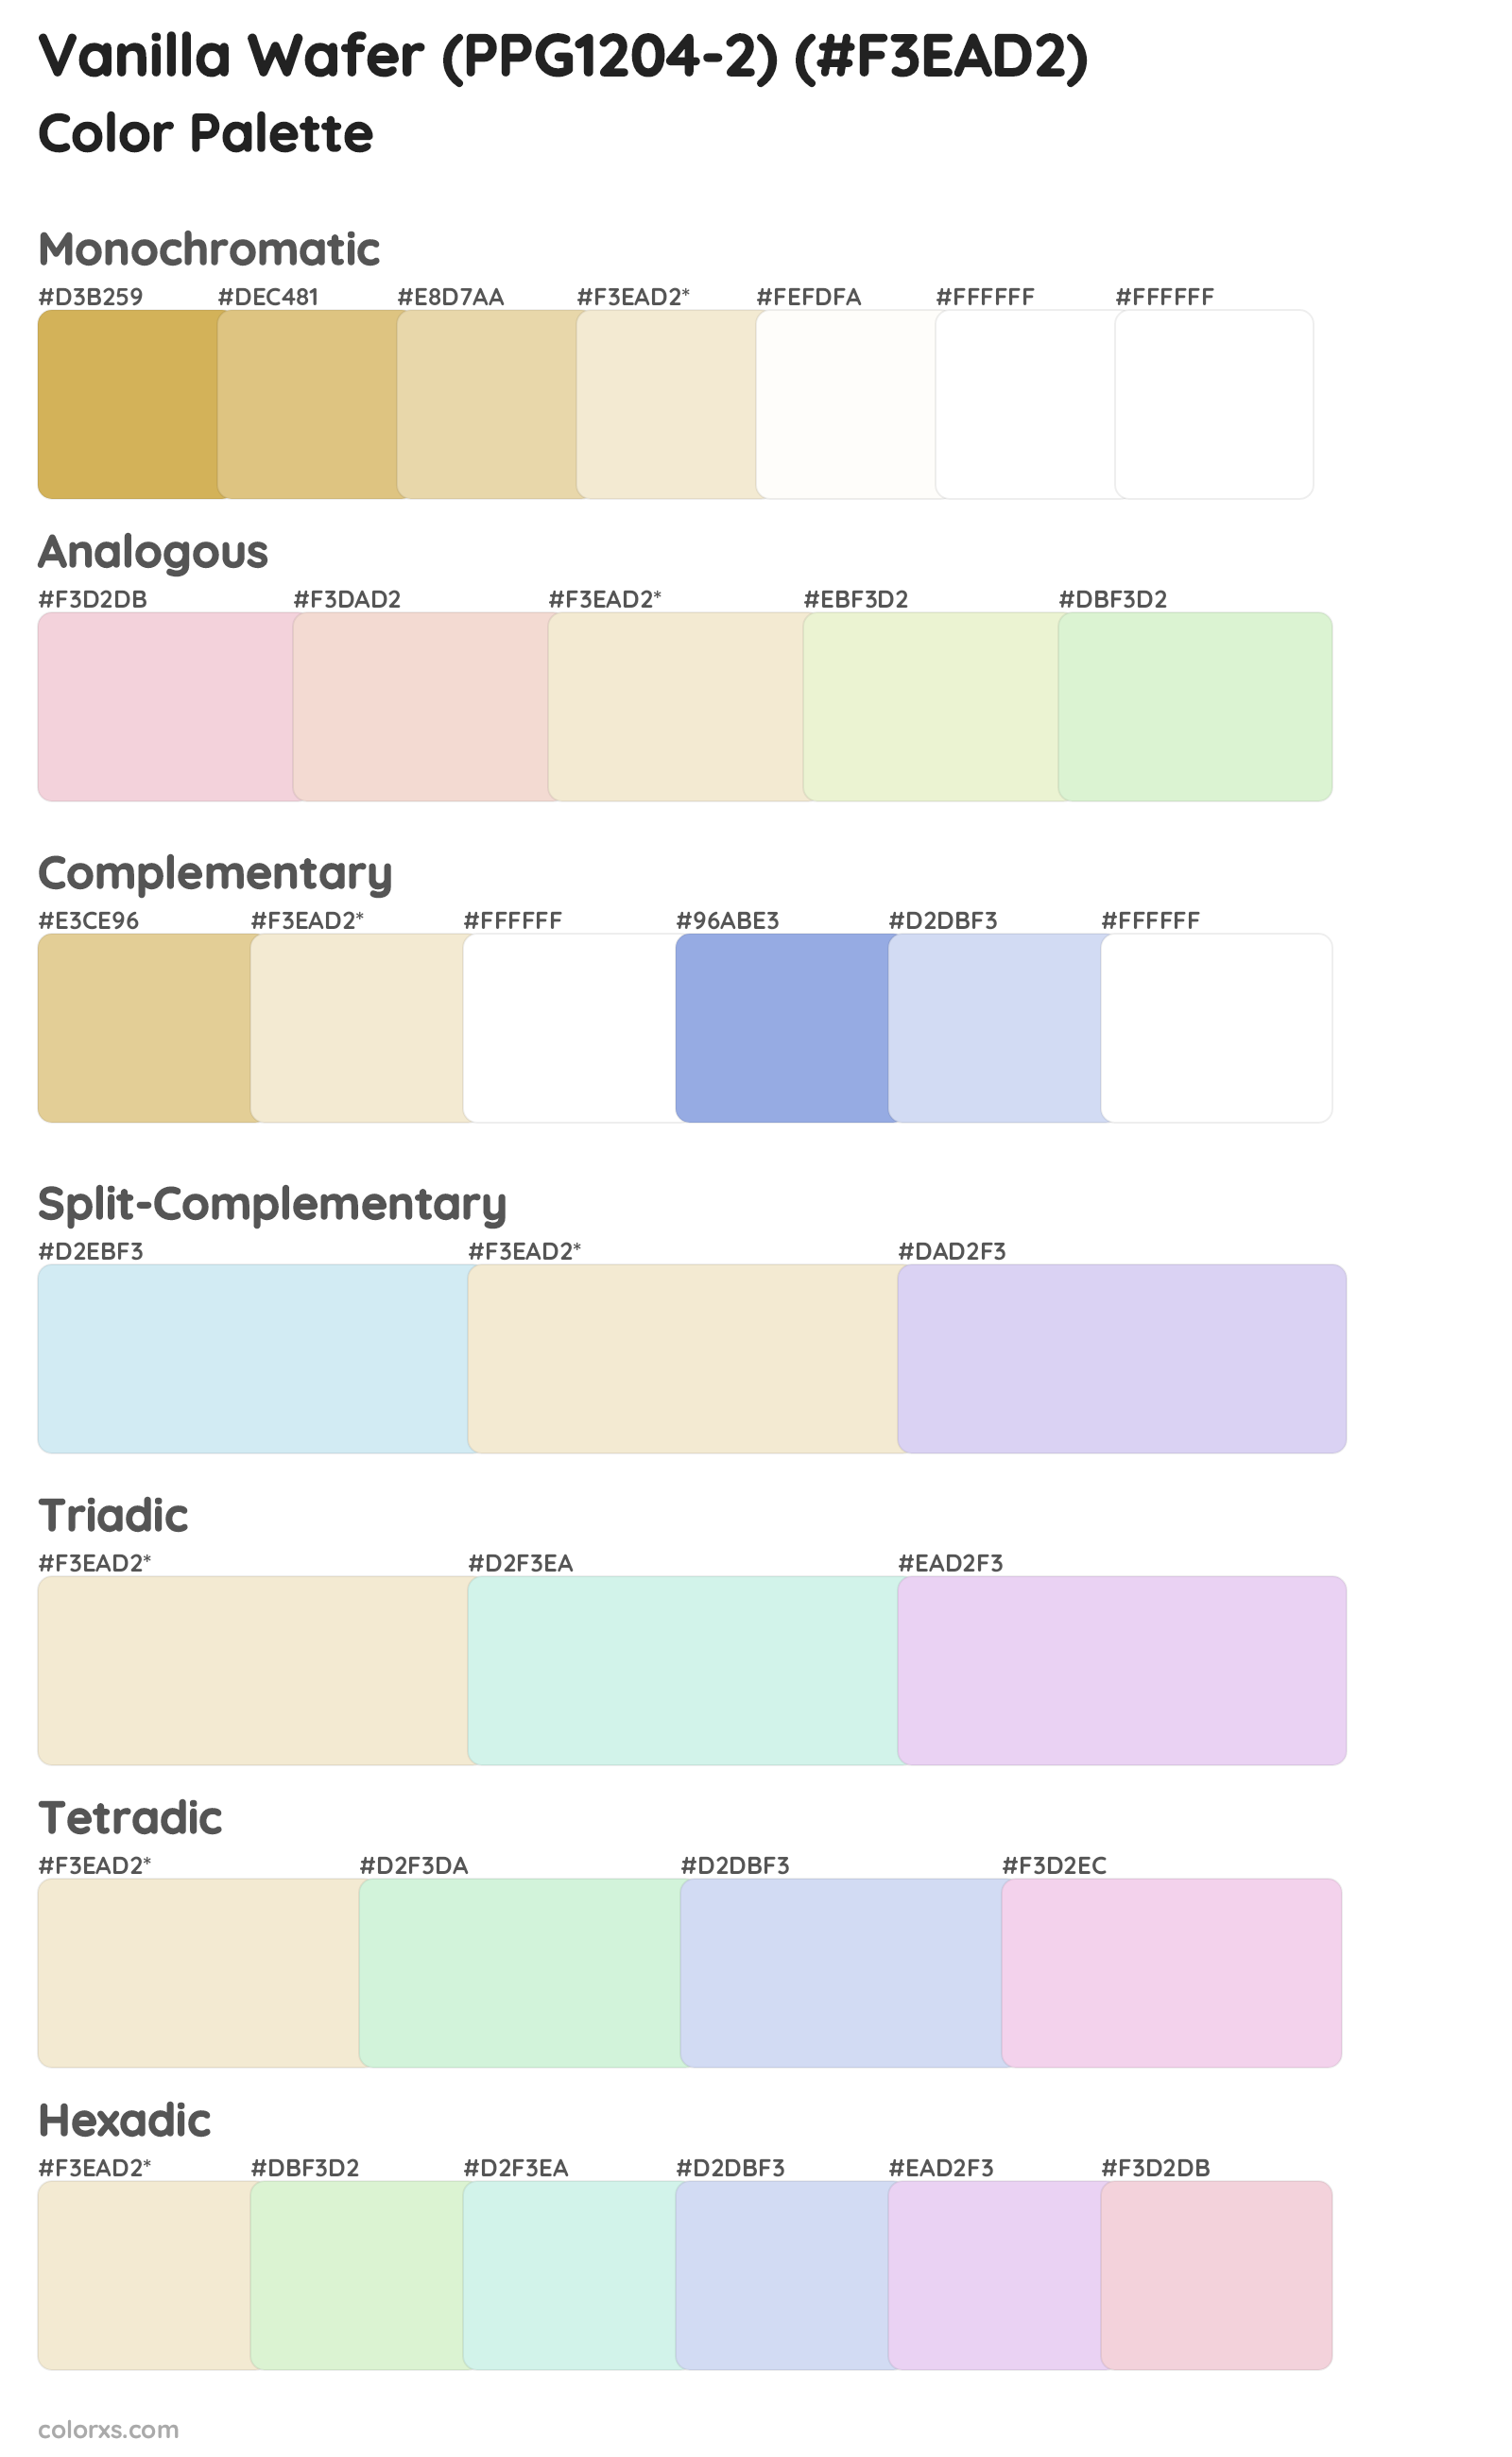 Vanilla Wafer (PPG1204-2) Color Scheme Palettes